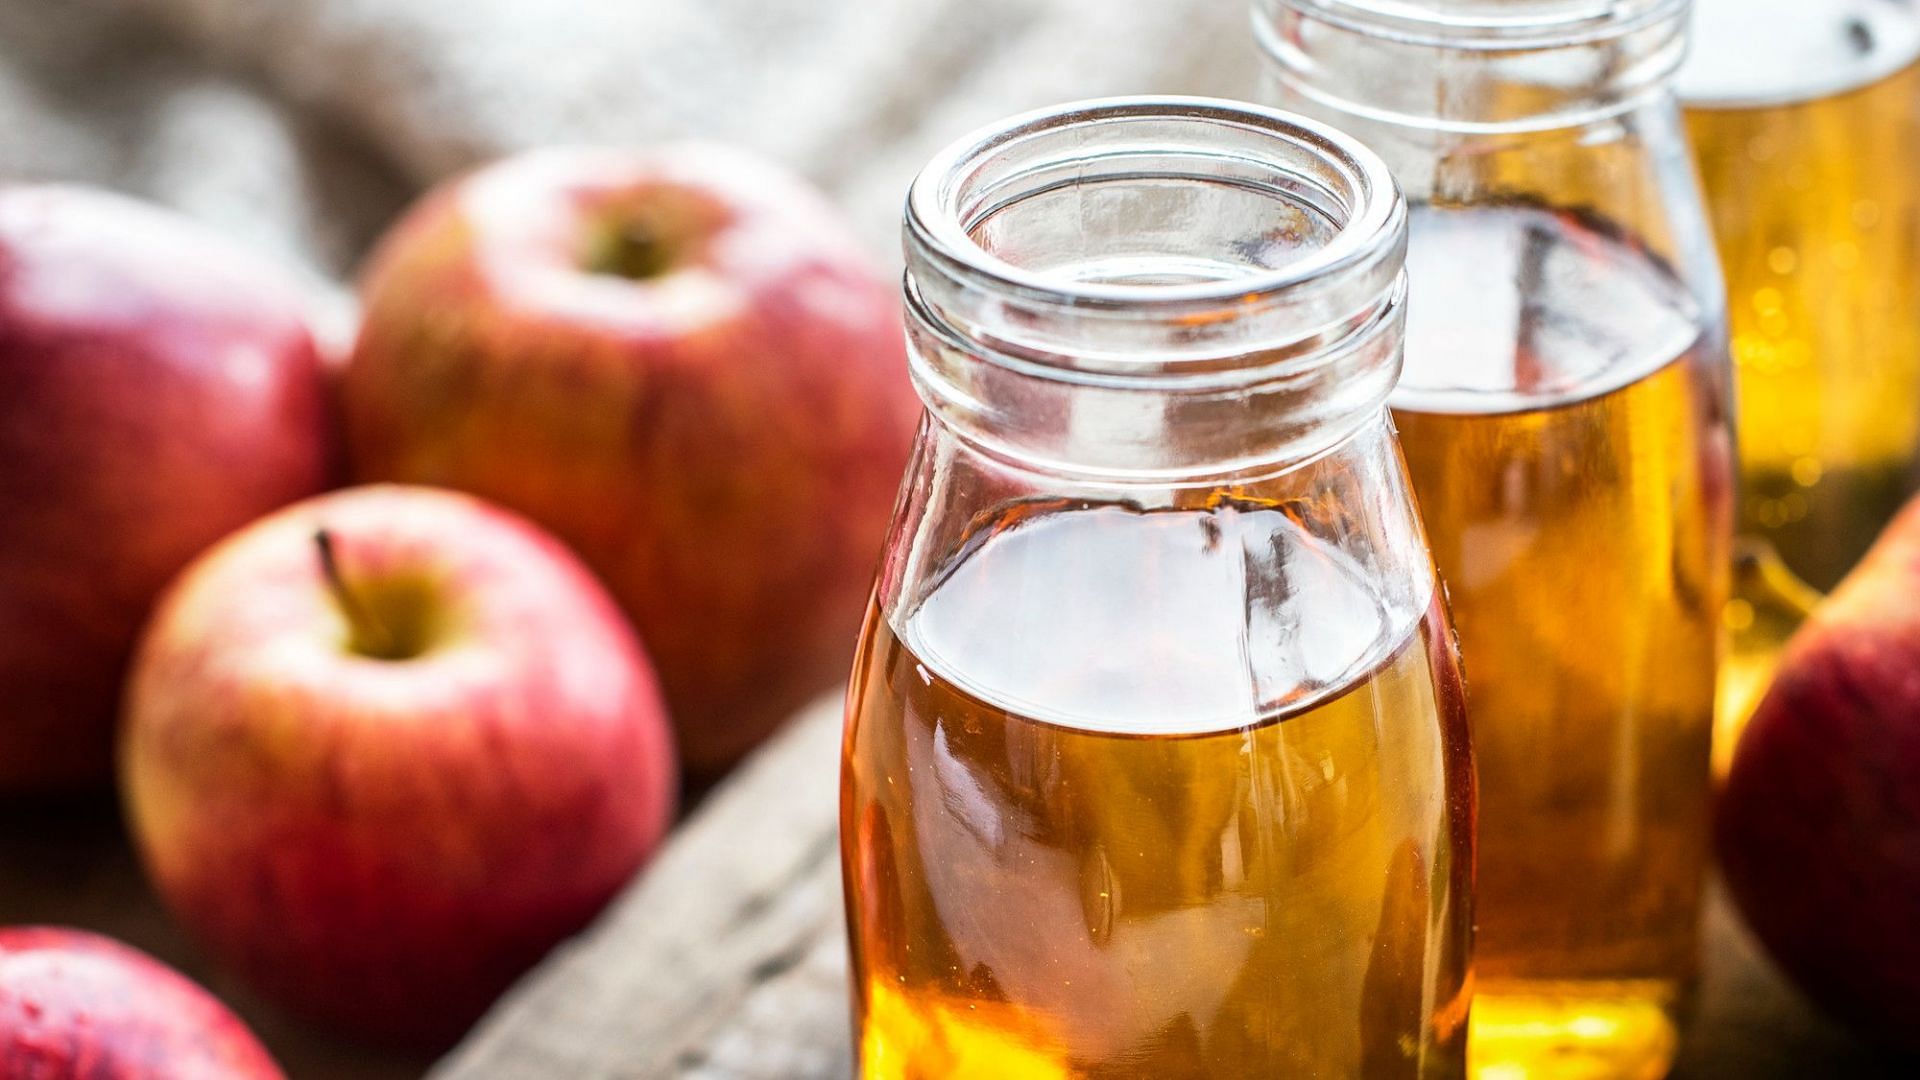 Apple cider vinegar benefits for hair include repairing dry and damaged hair. (Photo via Freepik)